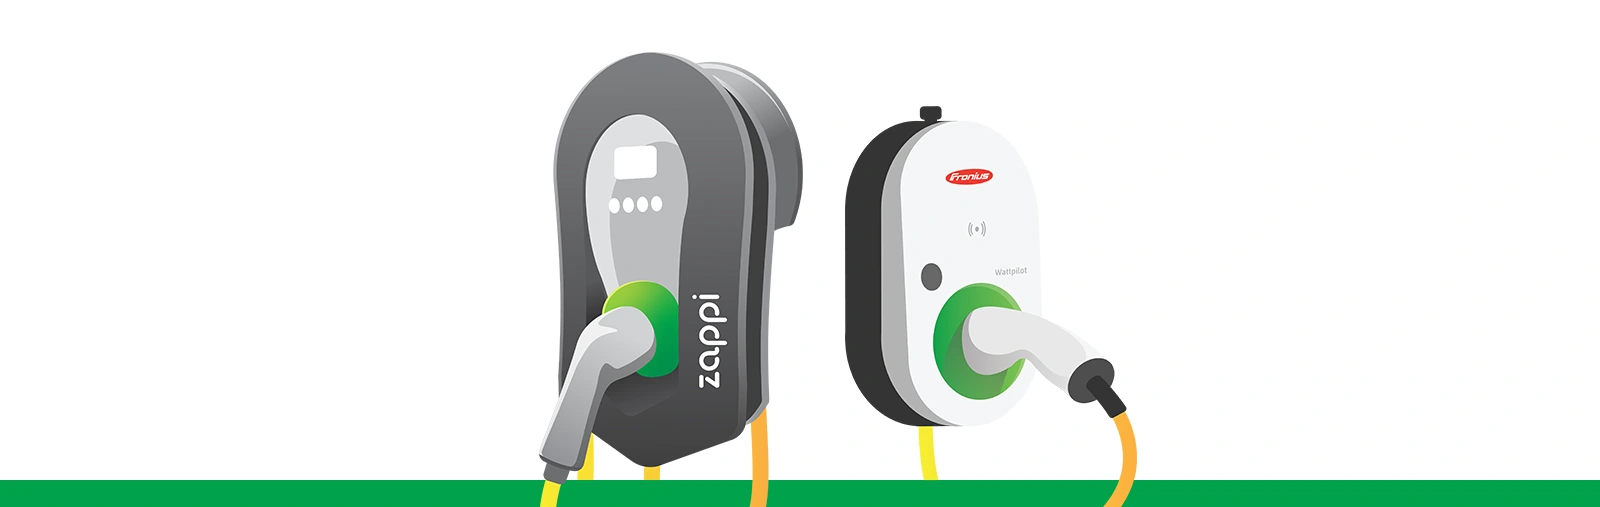 Zappi EV charger Fronius wattpilot electric vehicle charging